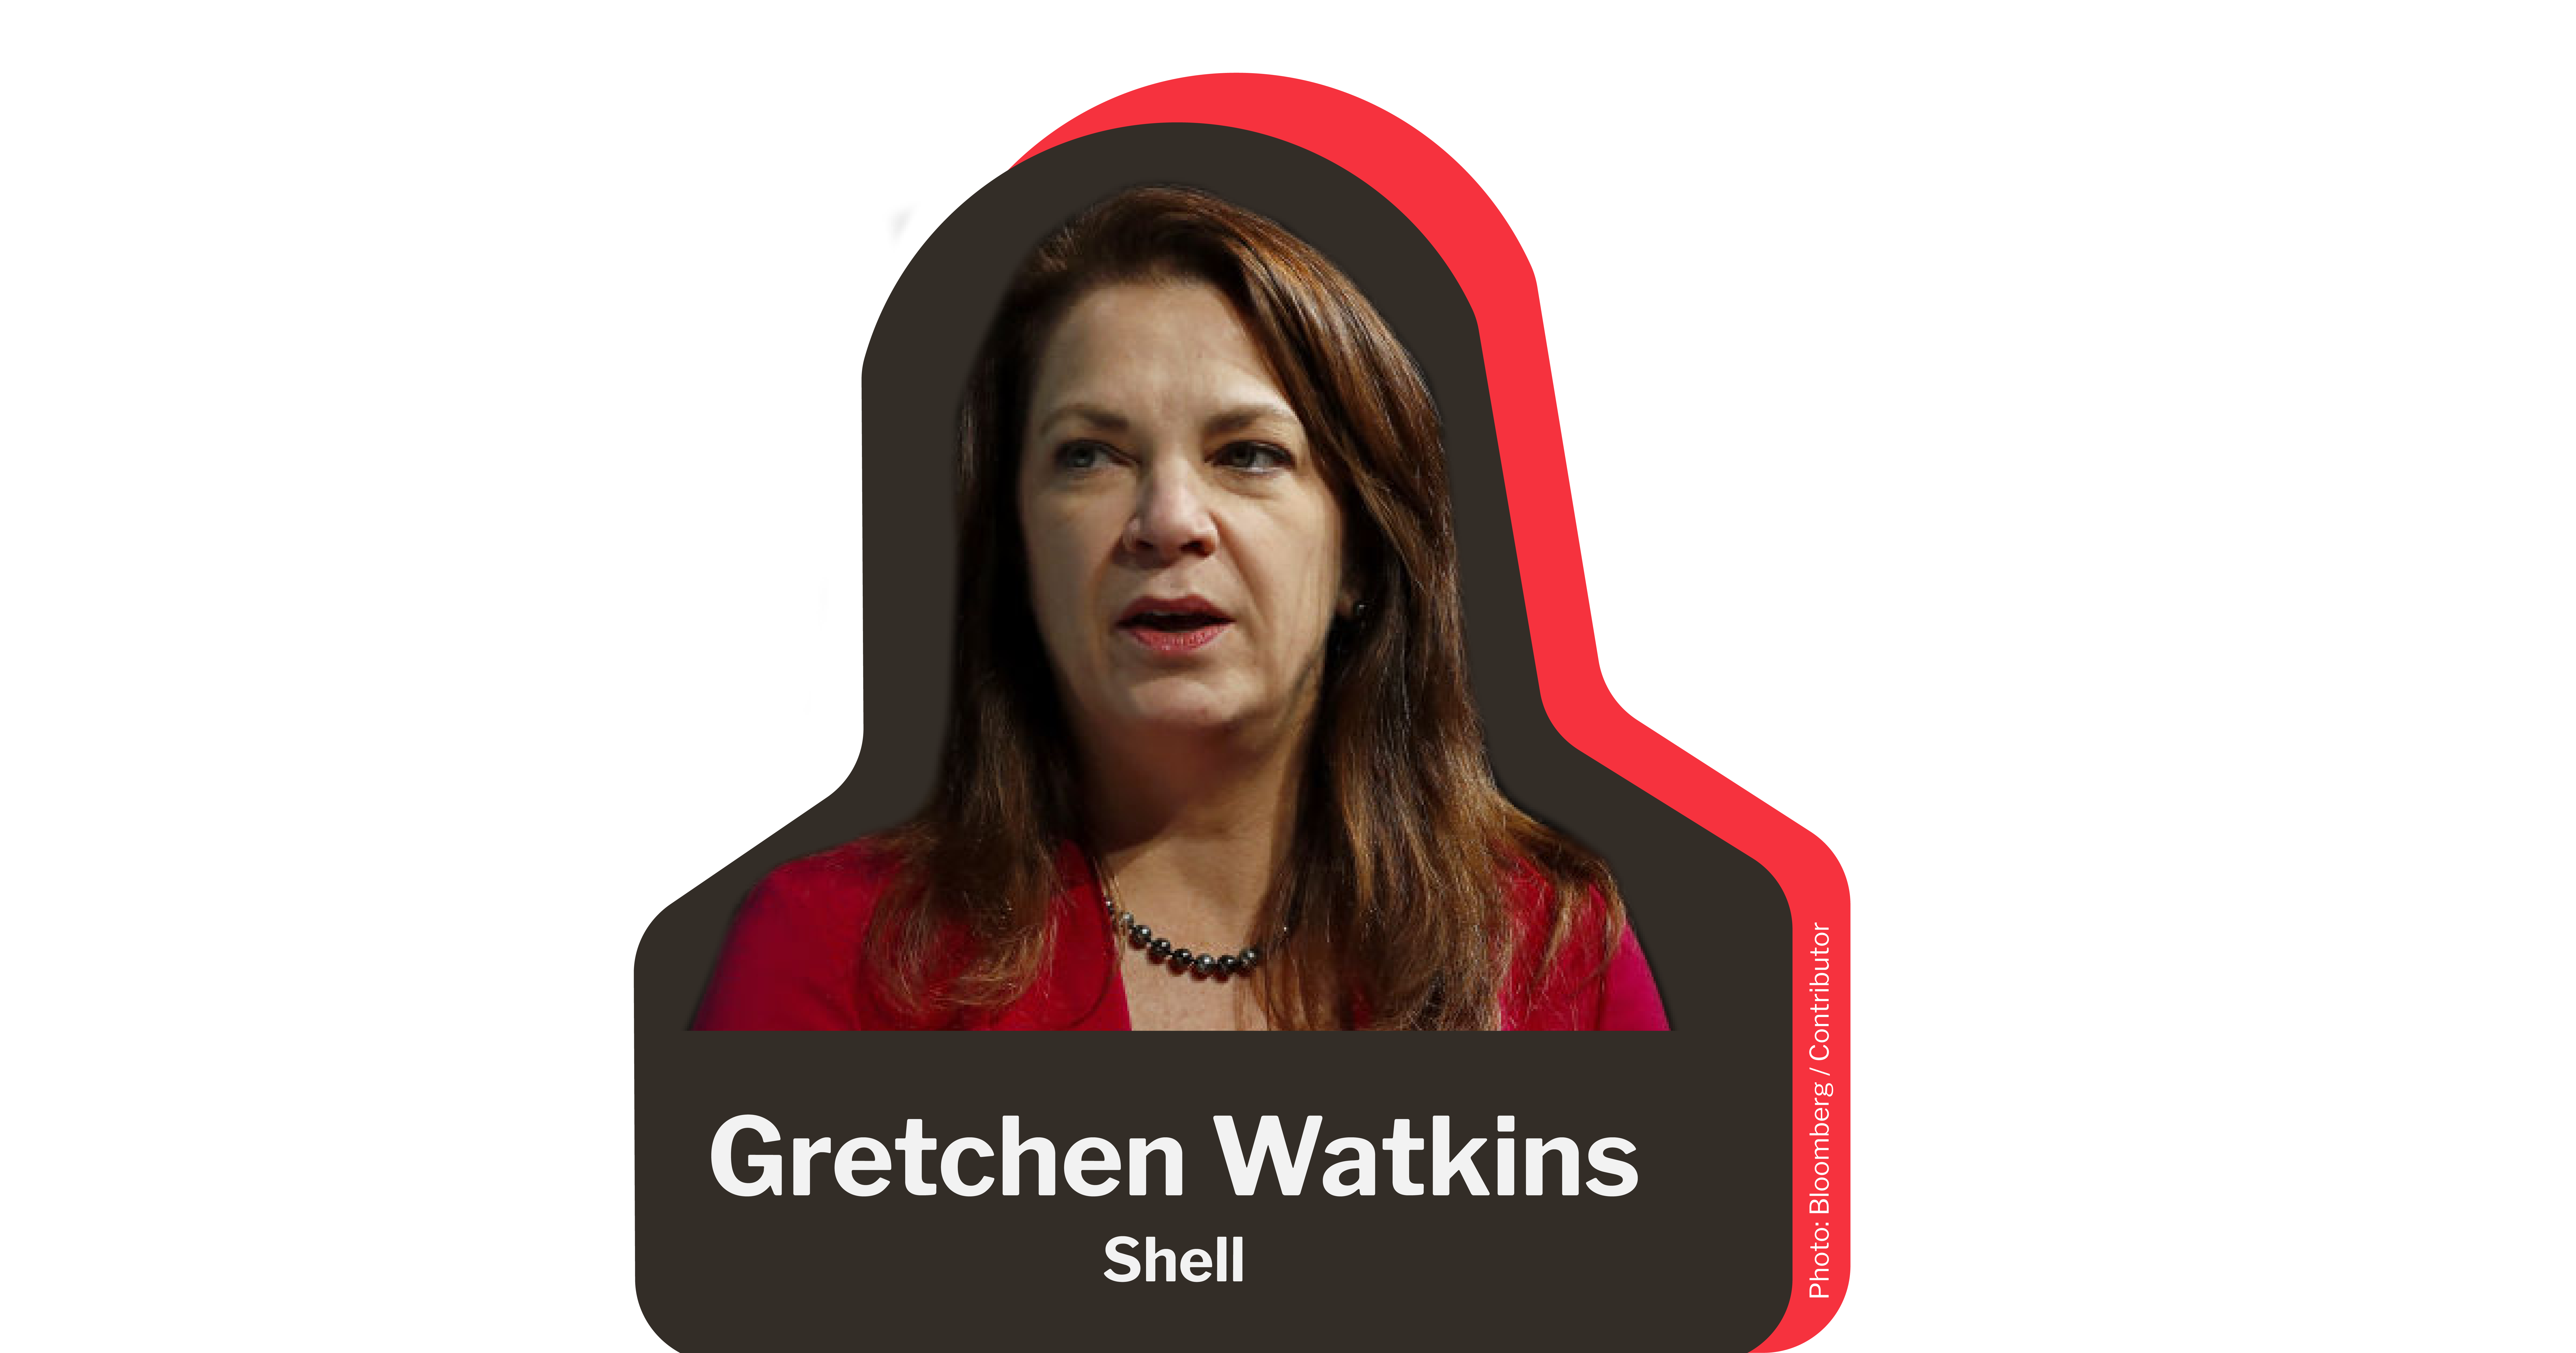 Shell Oil President Gretchen Watkins